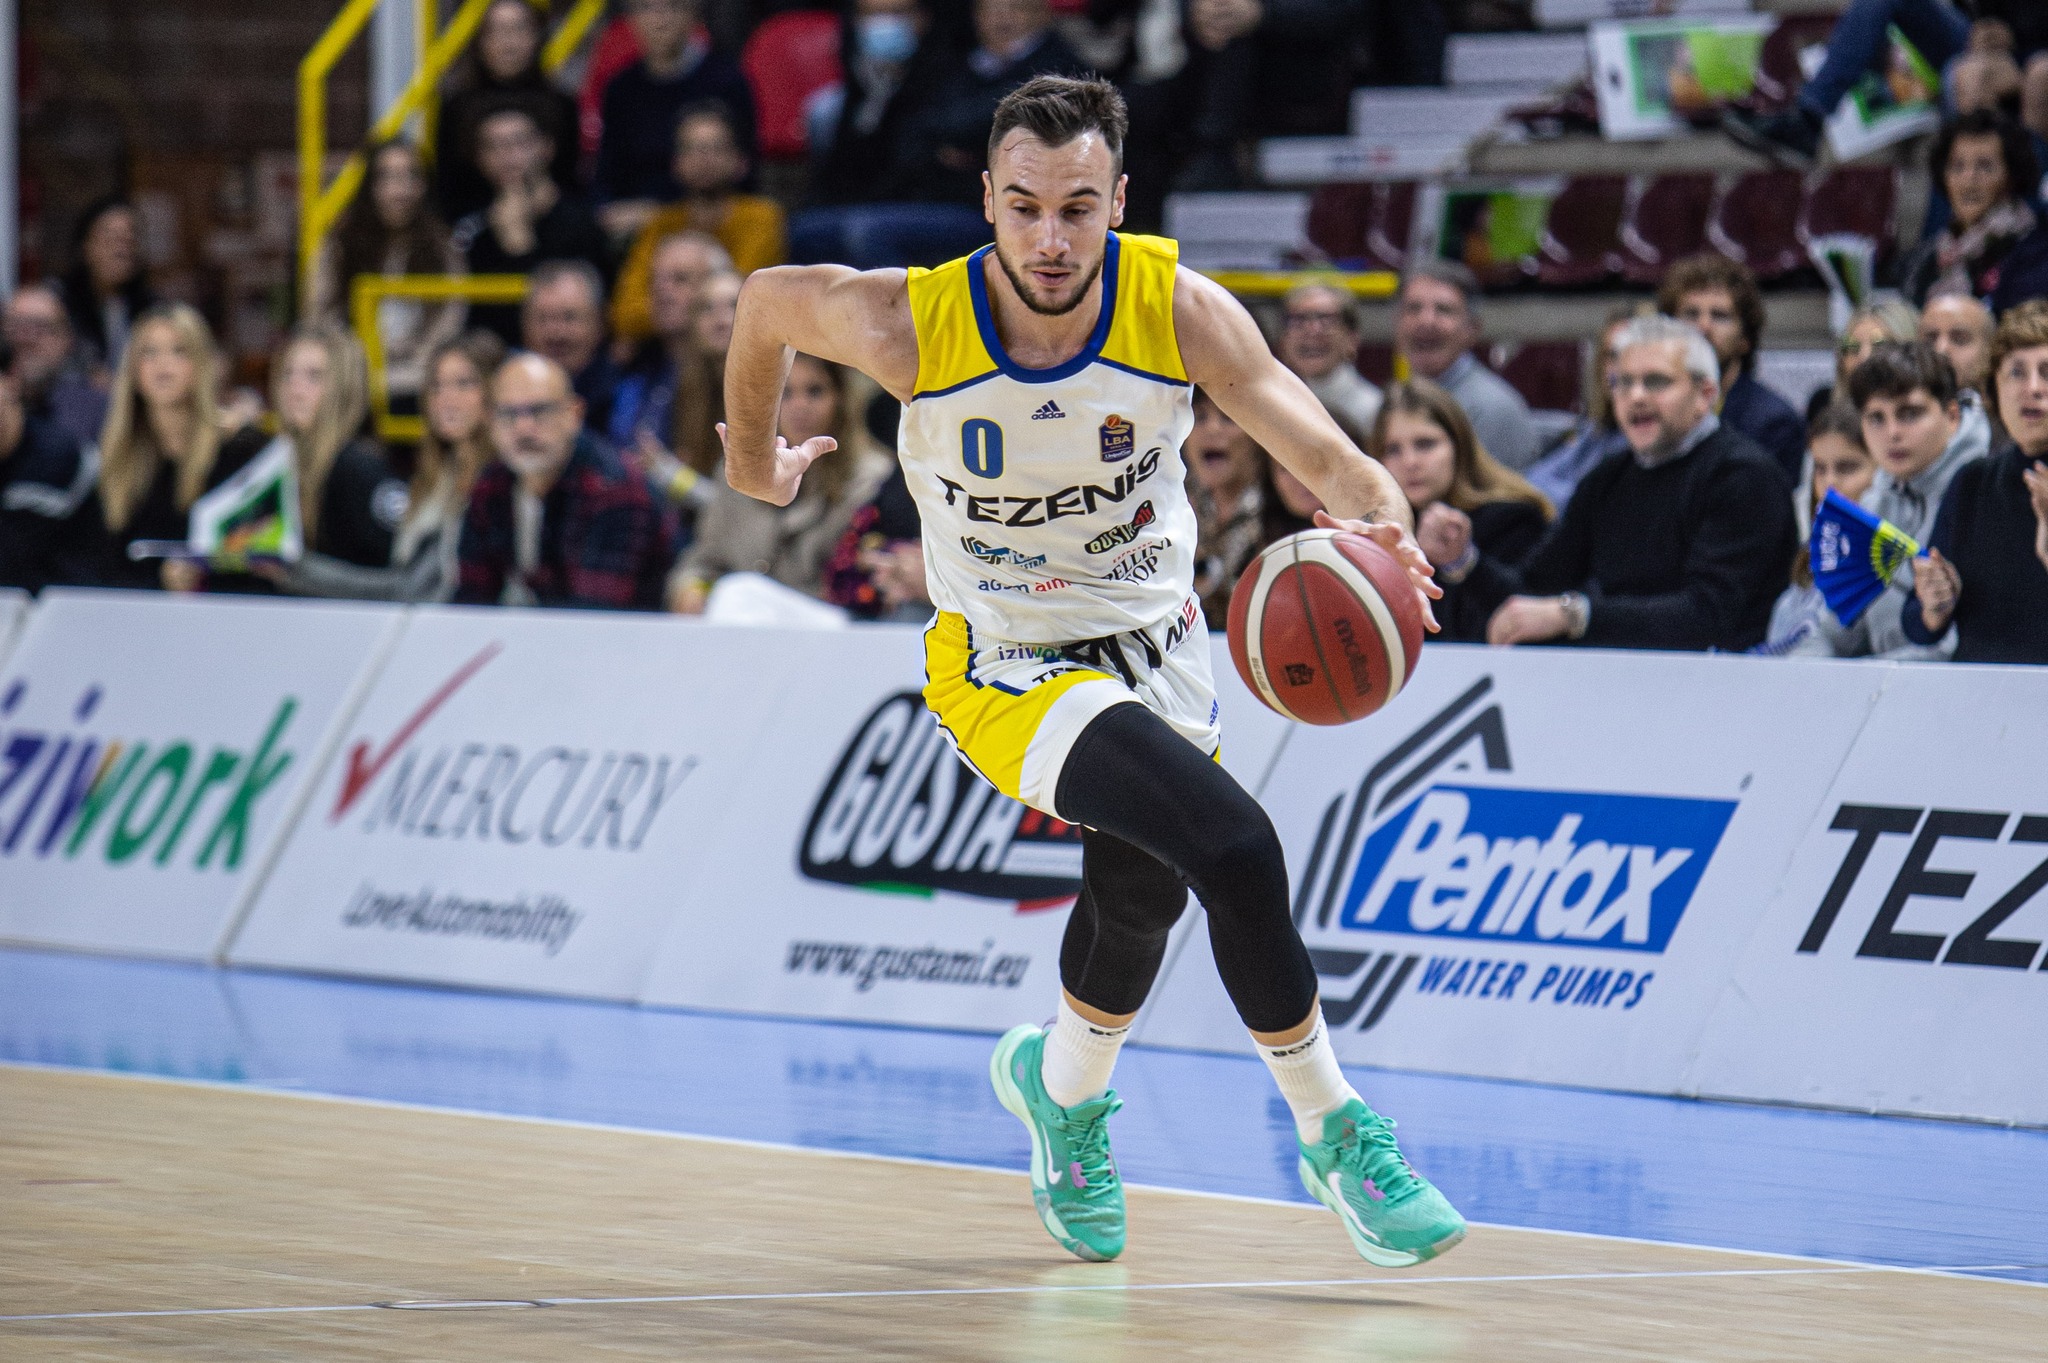 Trieste amara per la Tezenis, la Scaligera Basket perde e scende in A2